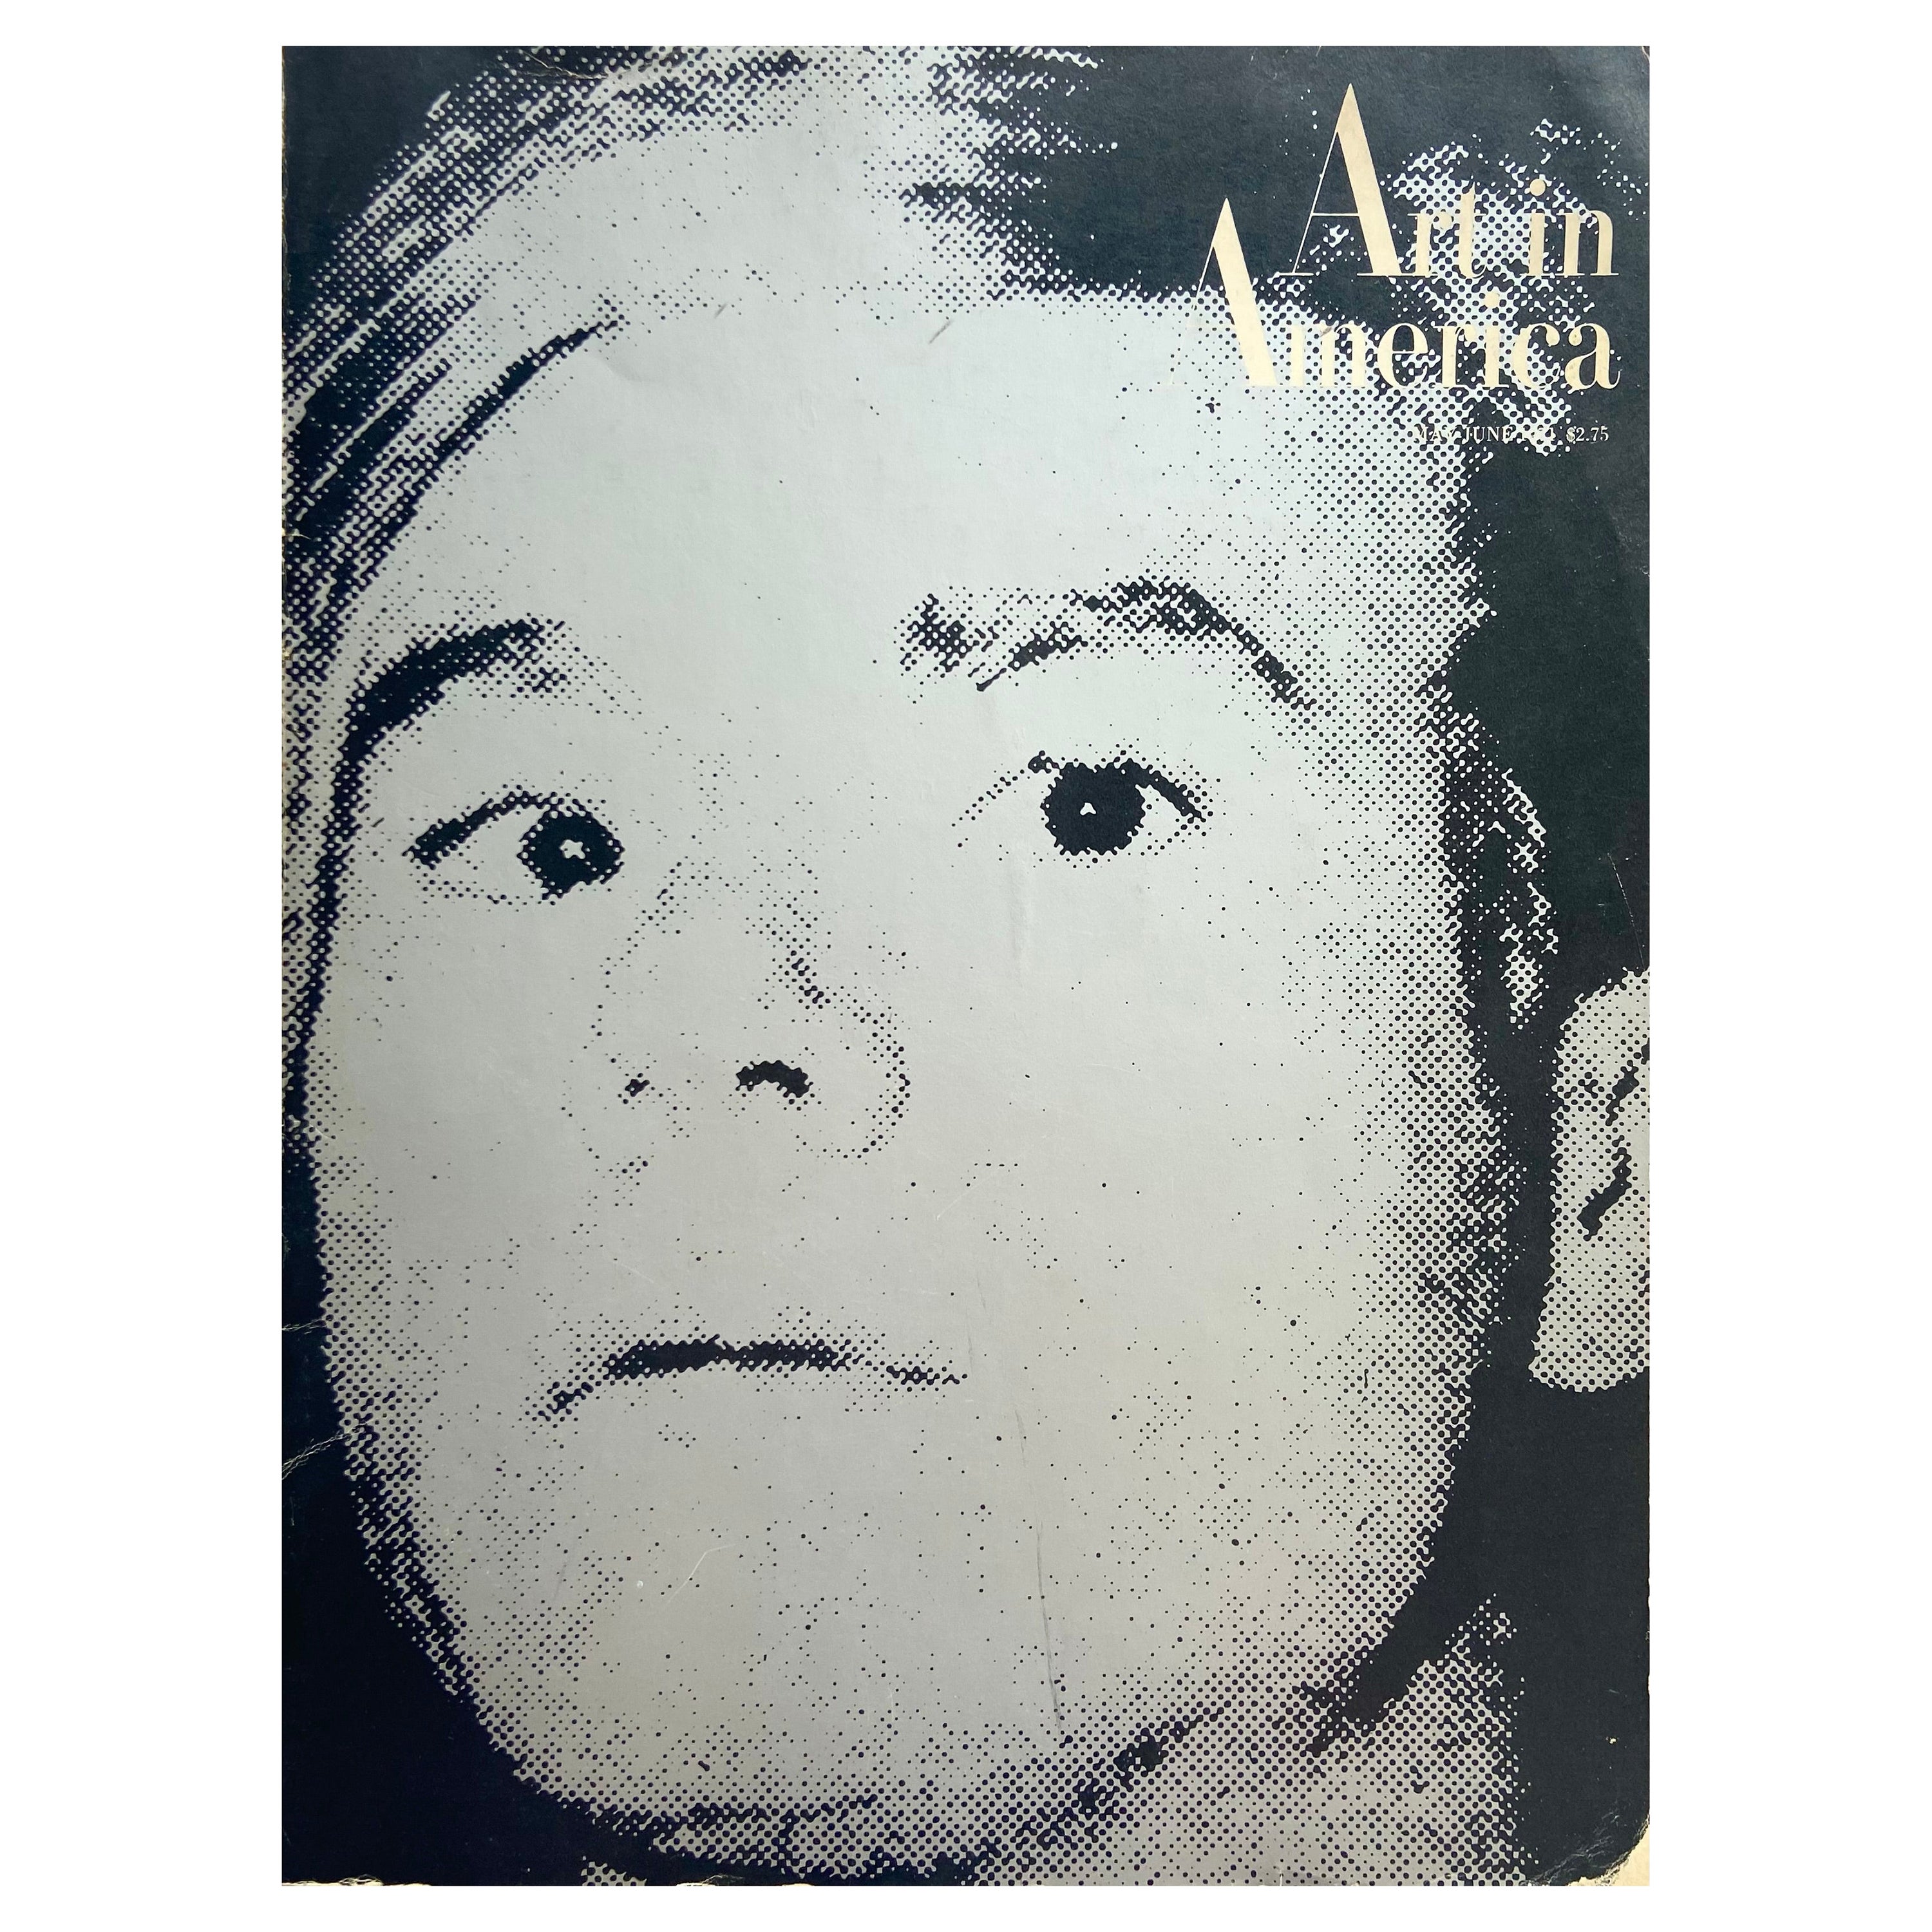 1970s Andy Warhol Art in America